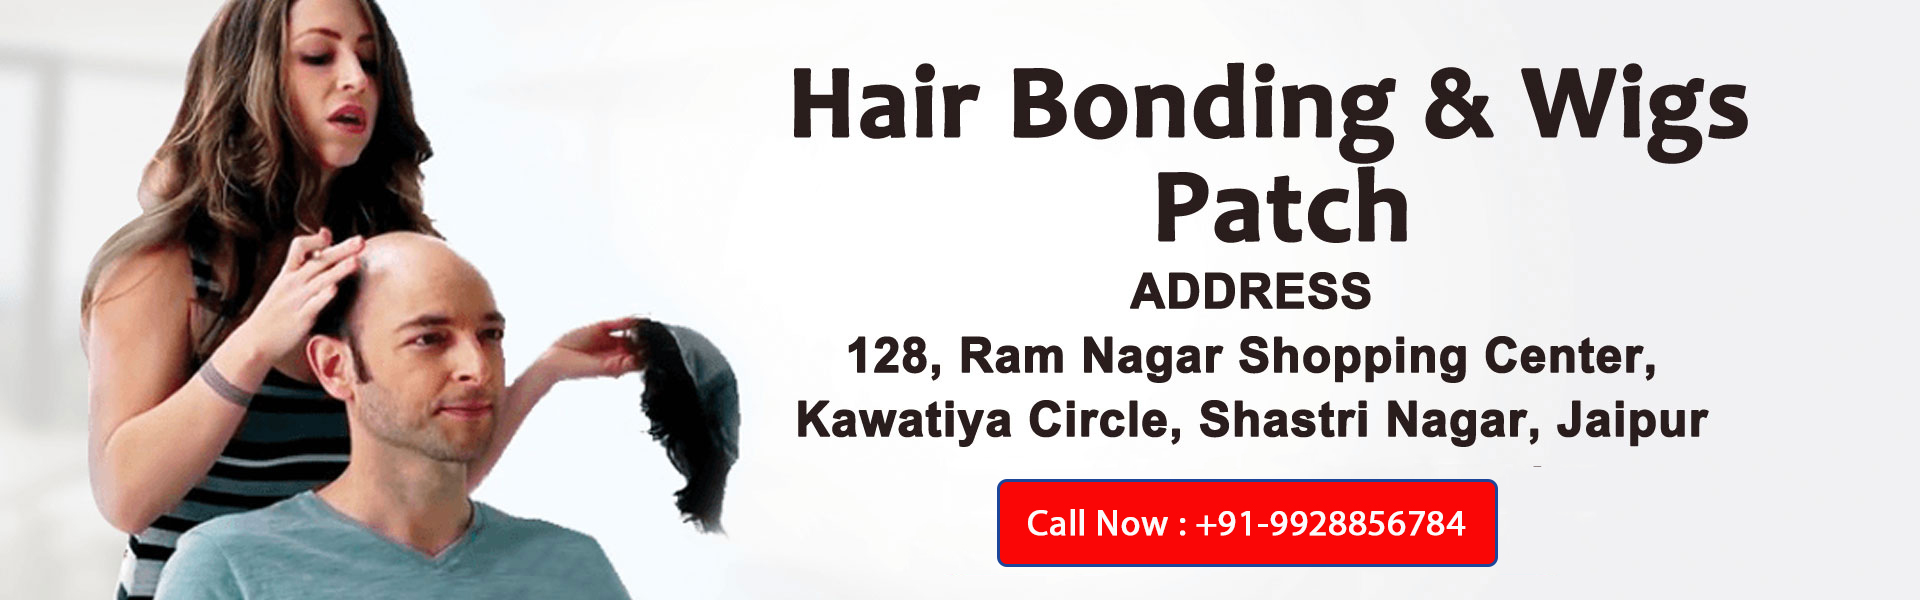 Best hair pasting center in jaipur, Get best Offer Call Fayyas